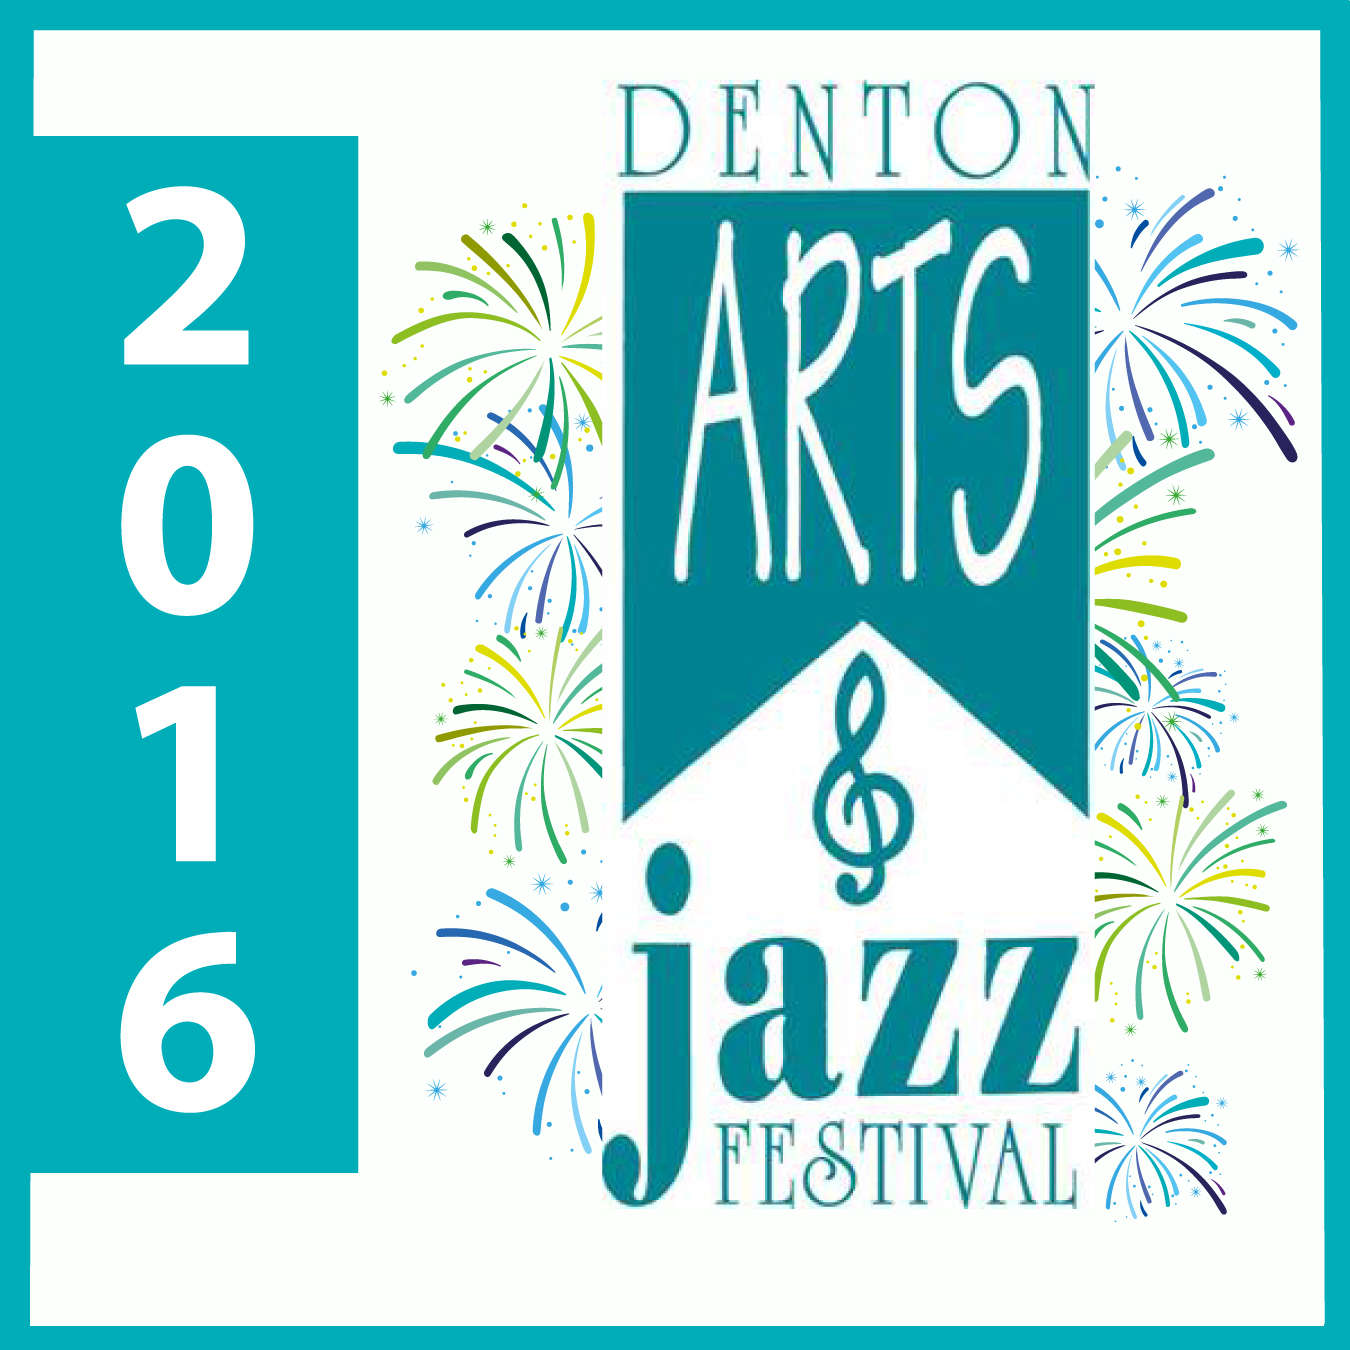 DCTA is Back at the Denton Arts & Jazz Festival